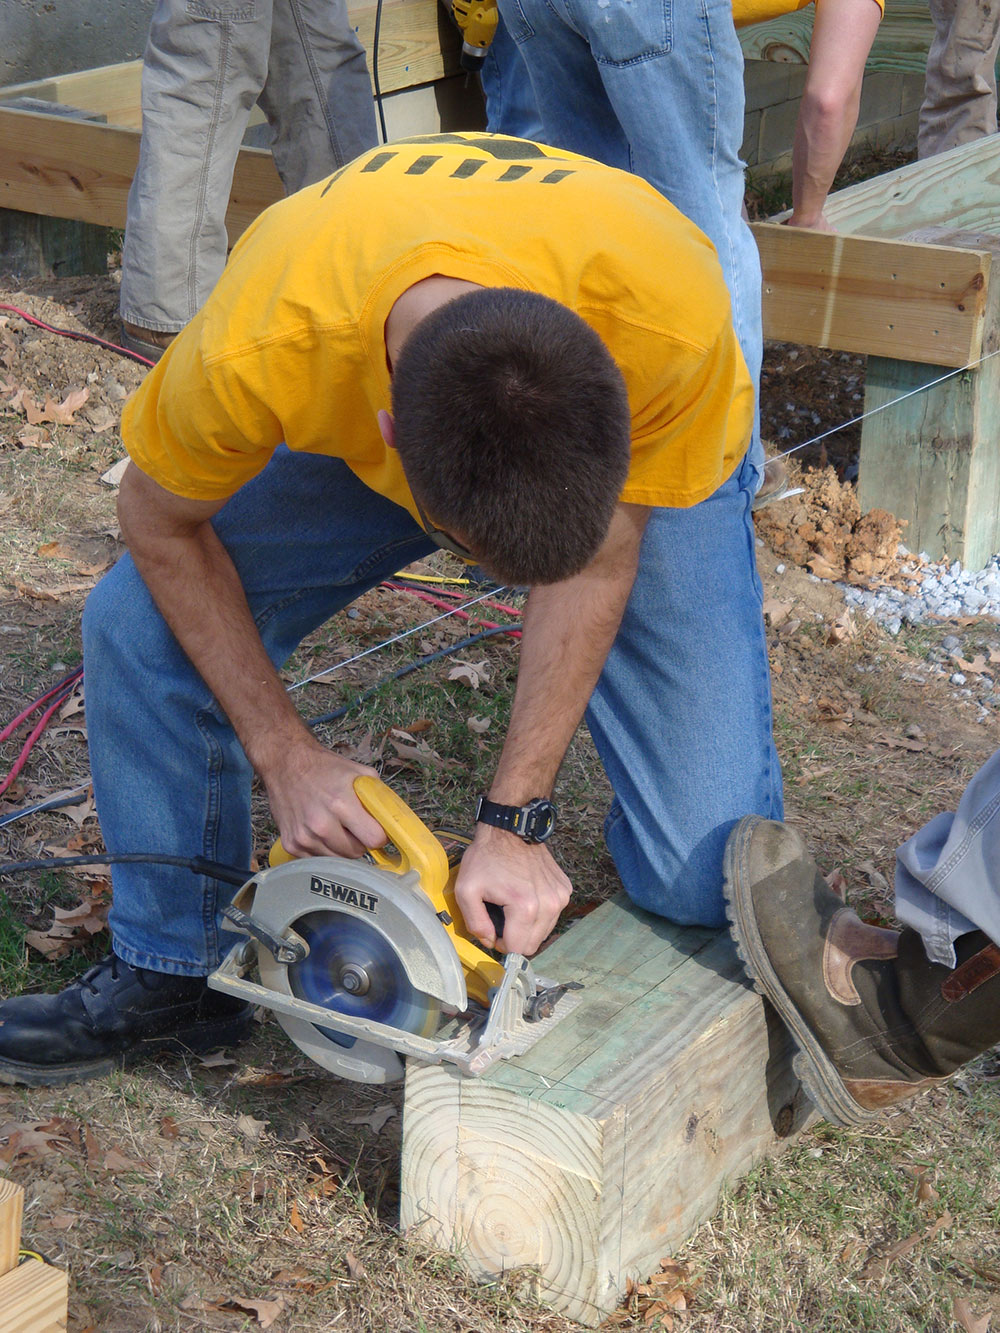 student uses saw on wood